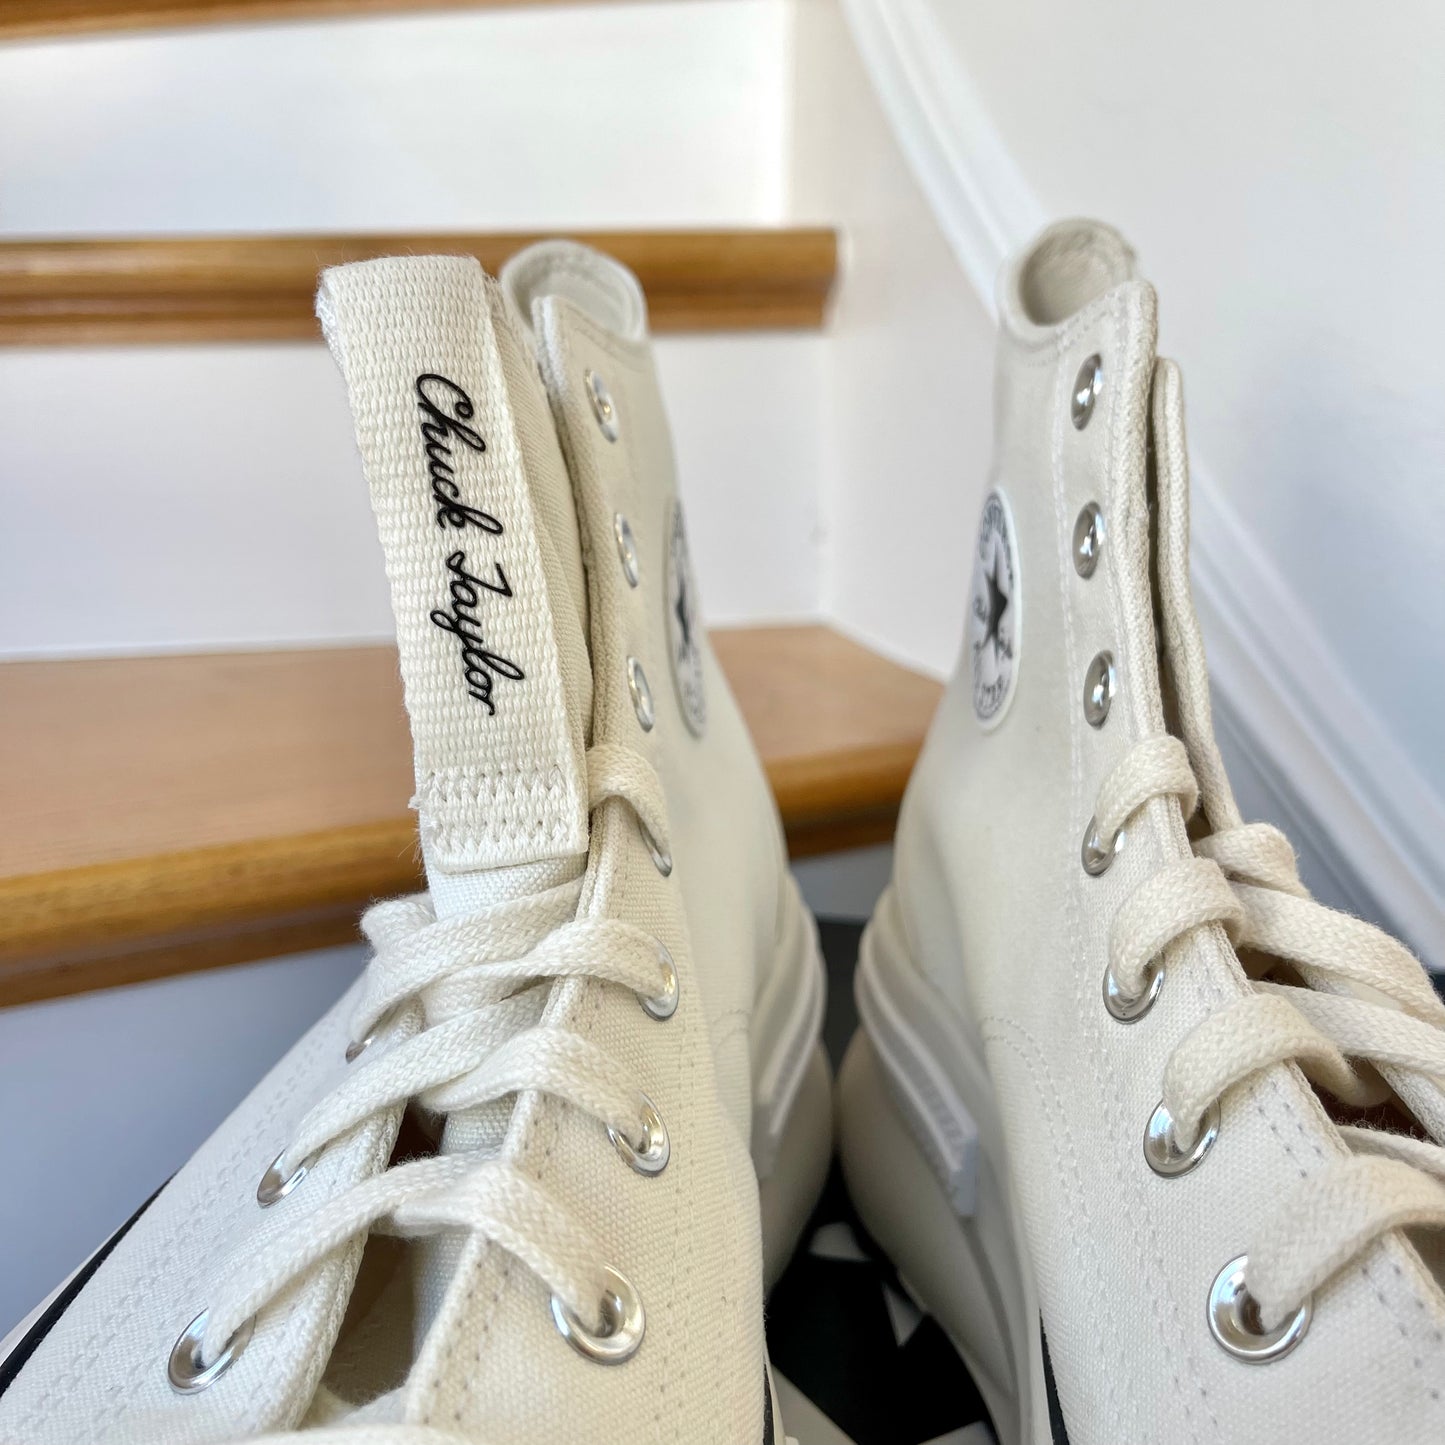 Converse Run Star Legacy CX Hi Platform high top Chuck Taylor sneakers white